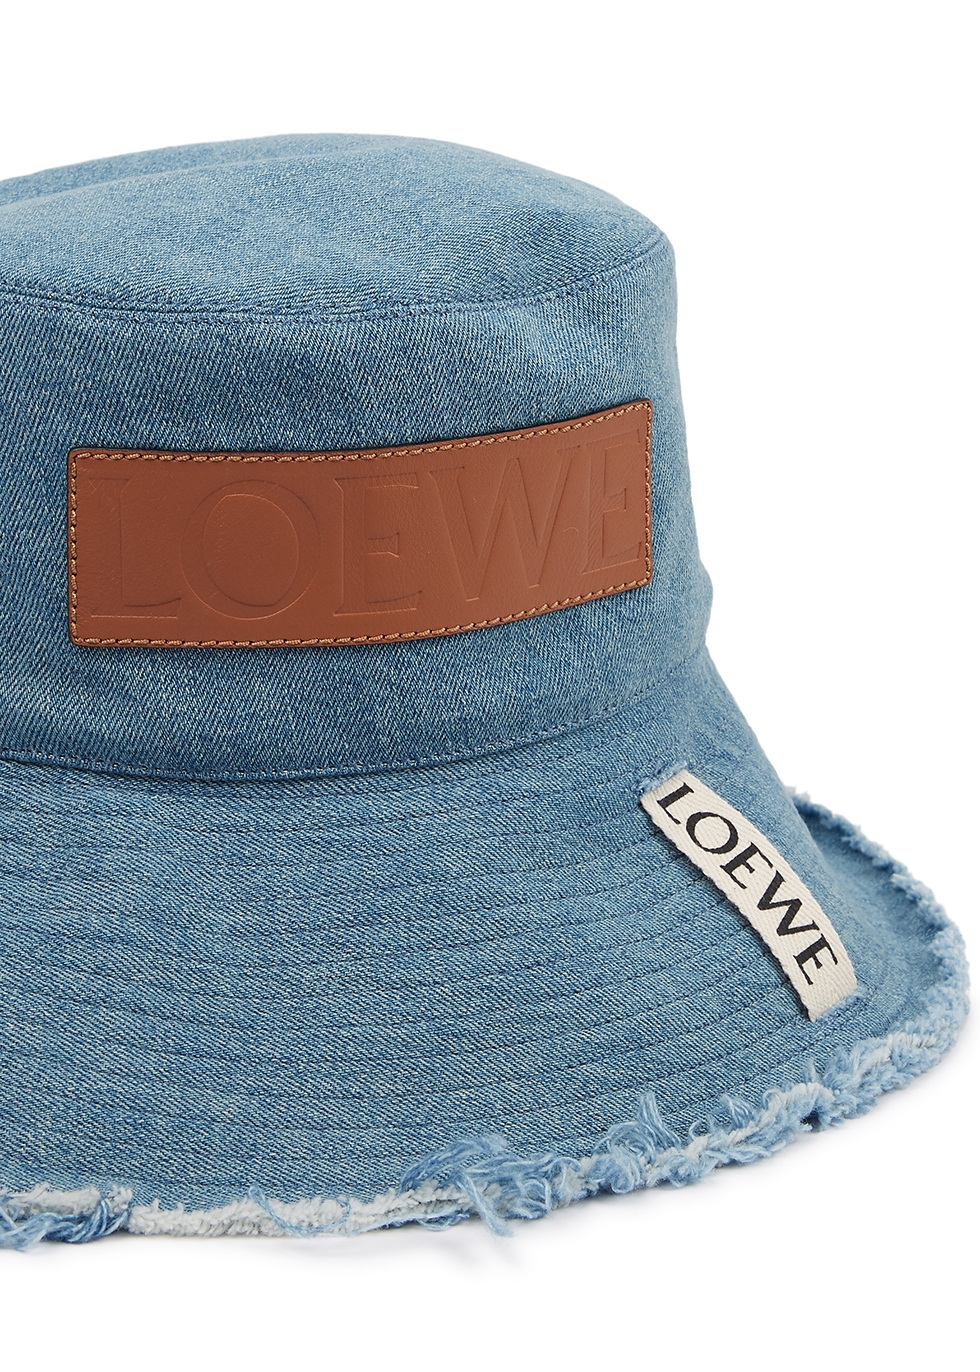 Loewe X Paula's Ibiza distressed denim bucket hat - Harvey Nichols